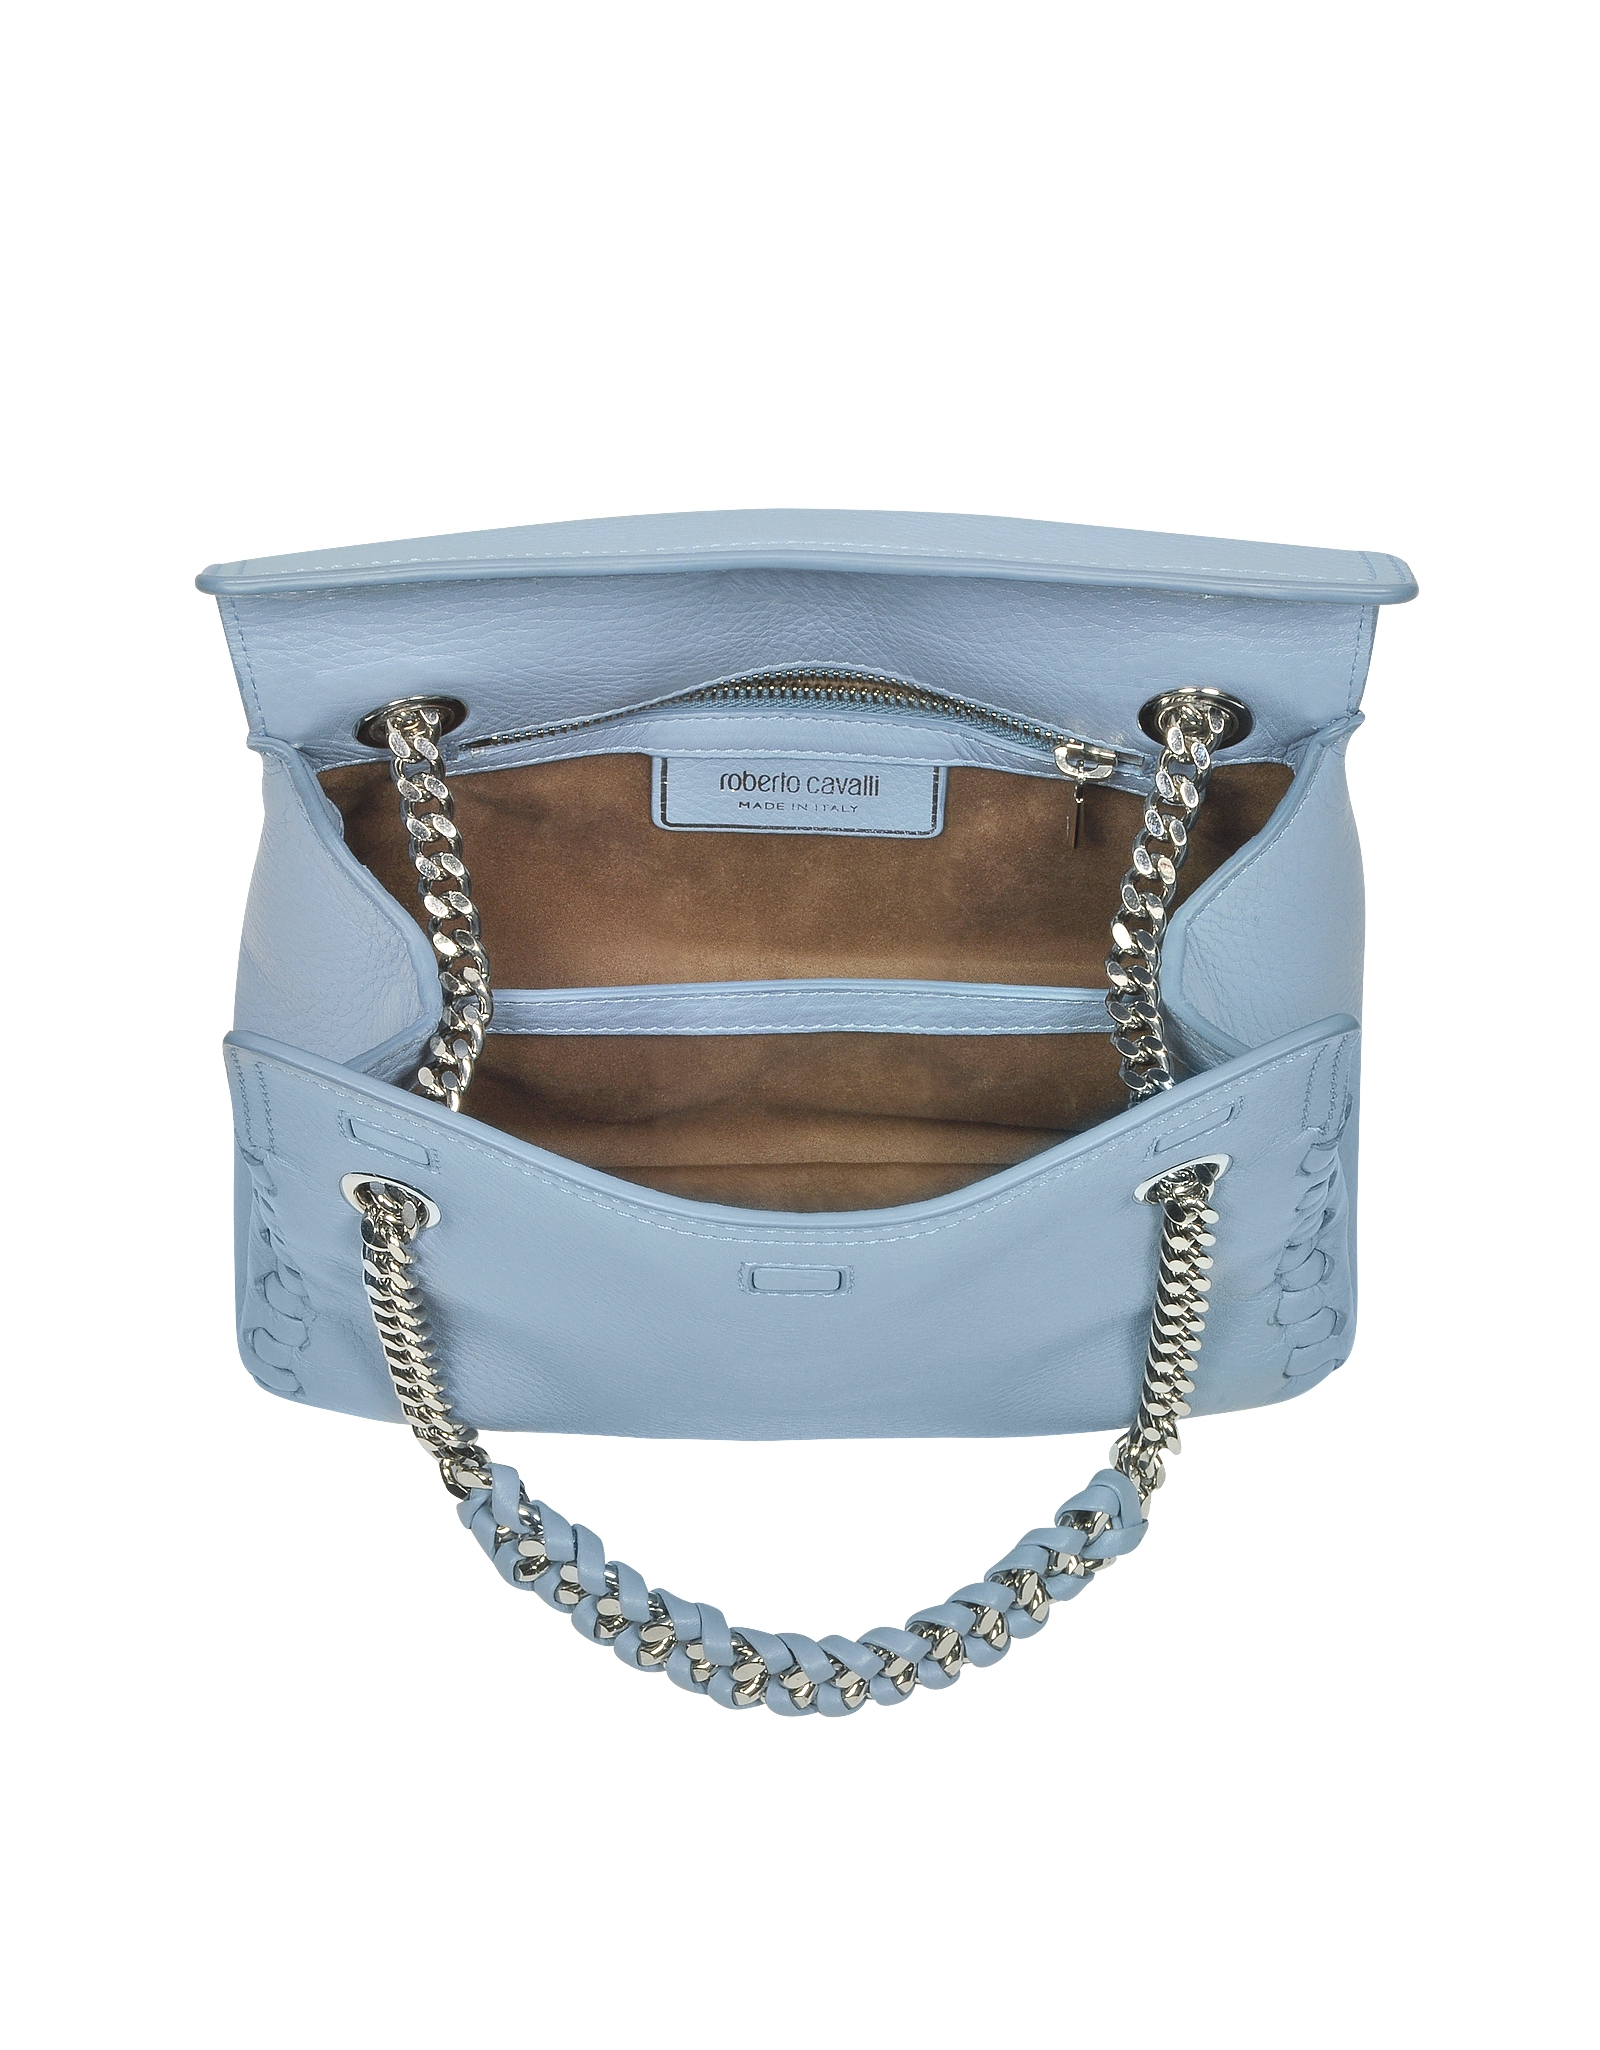 Roberto Cavalli Pompei Leather Crossbody Bag W/Chain Strap in Blue - Lyst